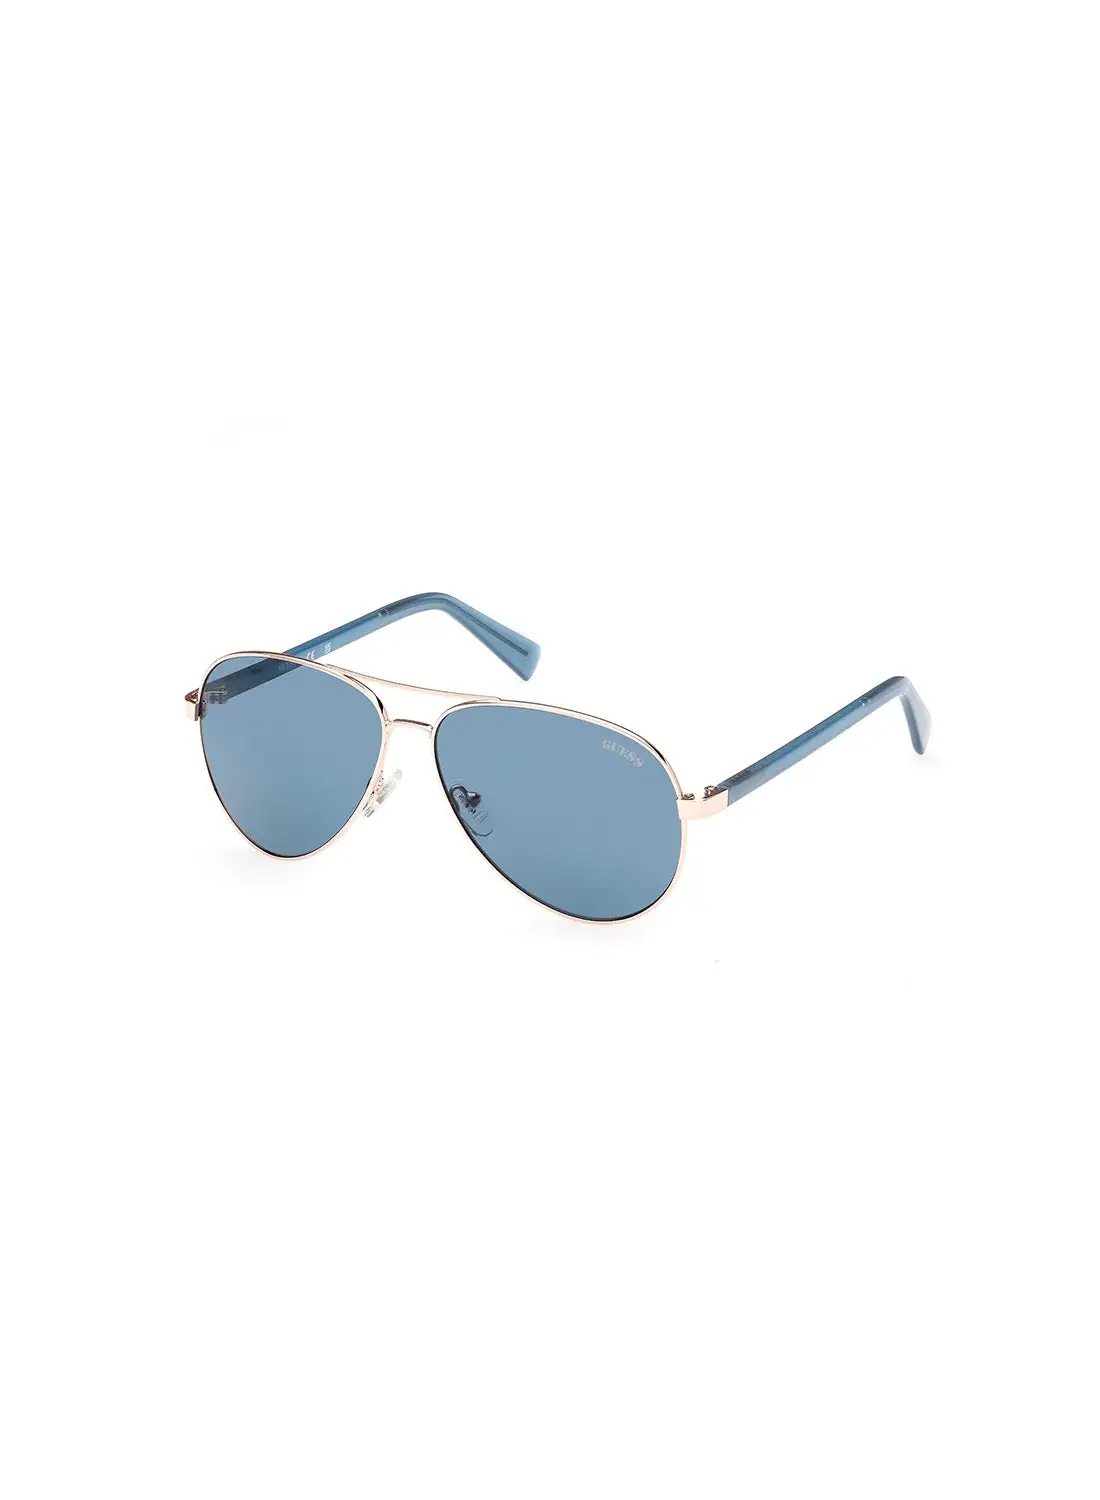 GUESS Unisex UV Protection Pilot Sunglasses - GU827928V58 - Lens Size: 58 Mm